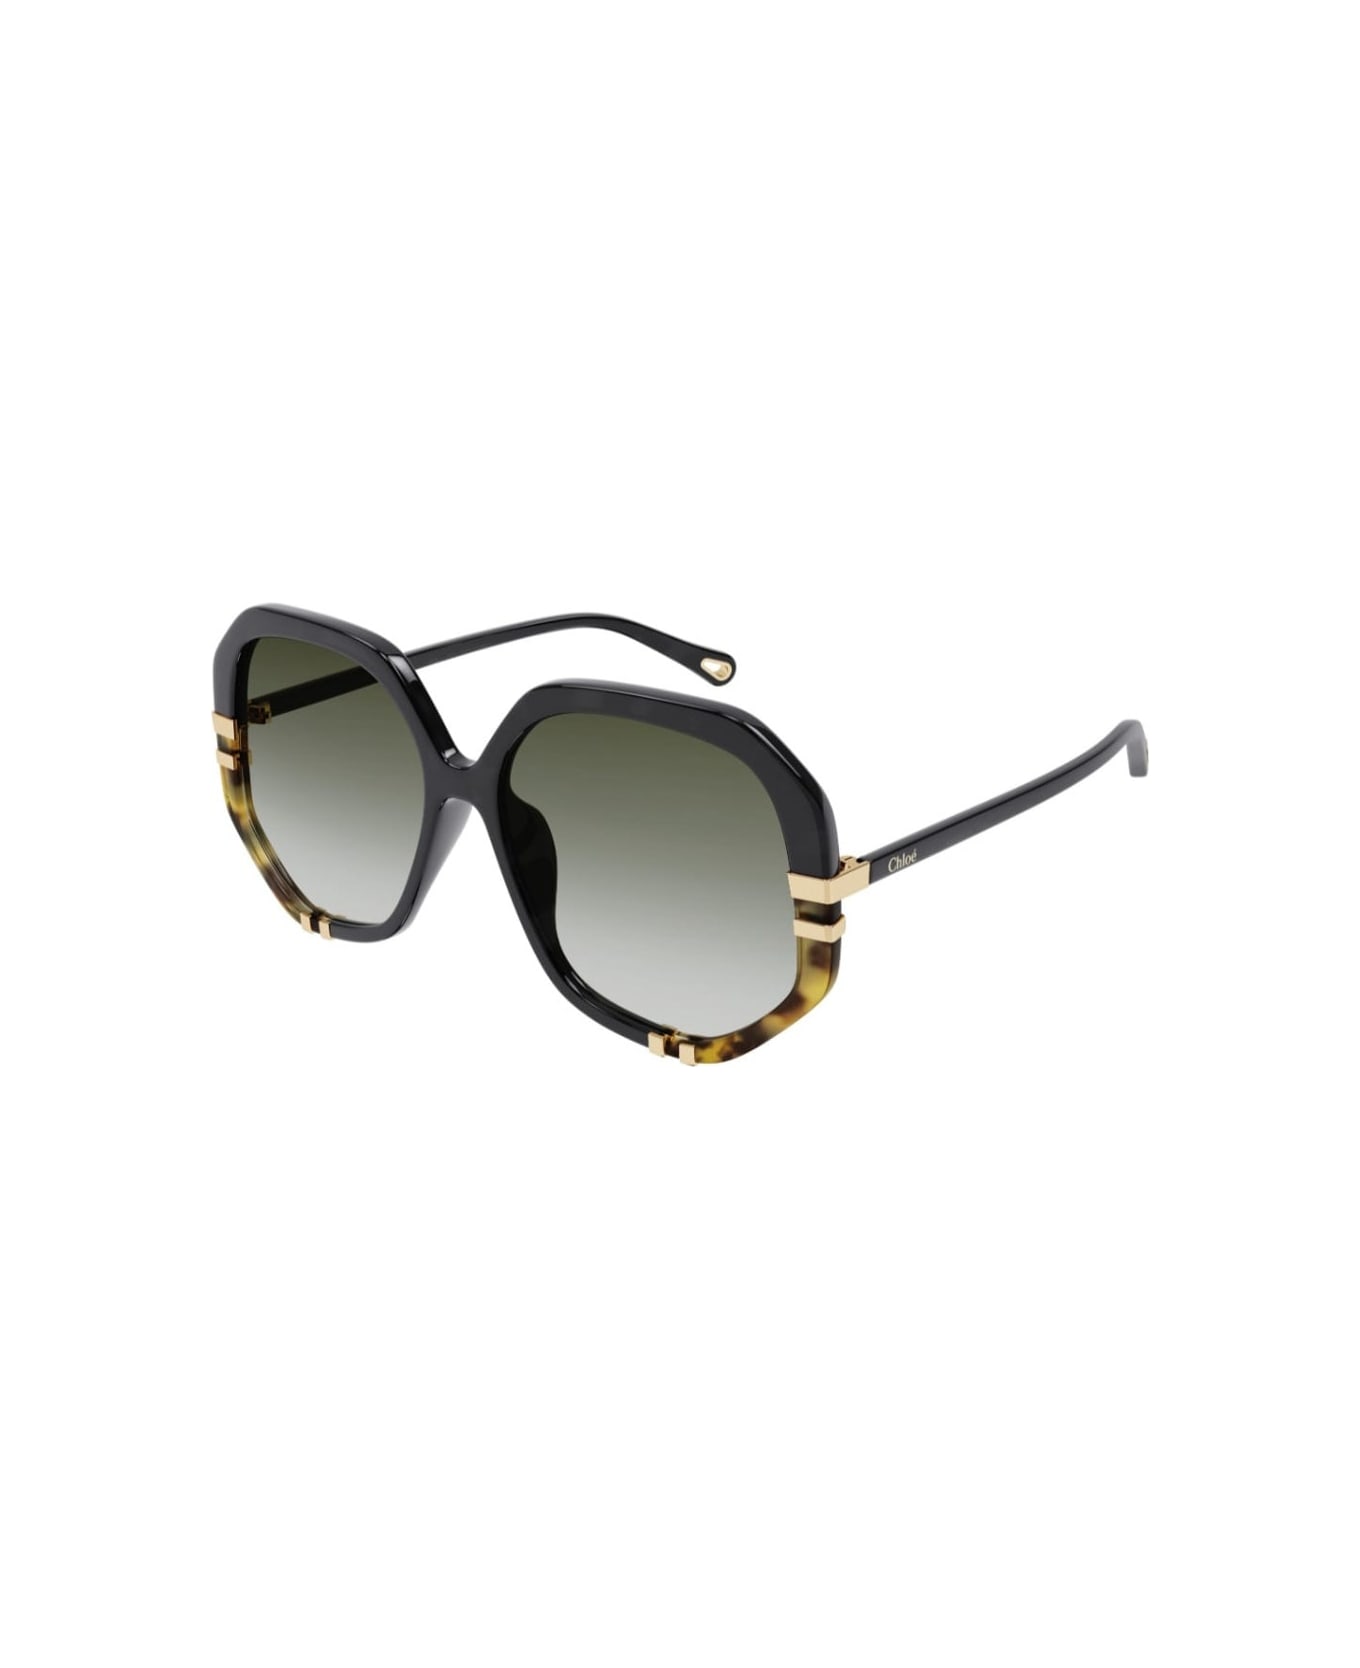 Chloé Eyewear CH0105S 002 Sunglasses - Black and tortoise